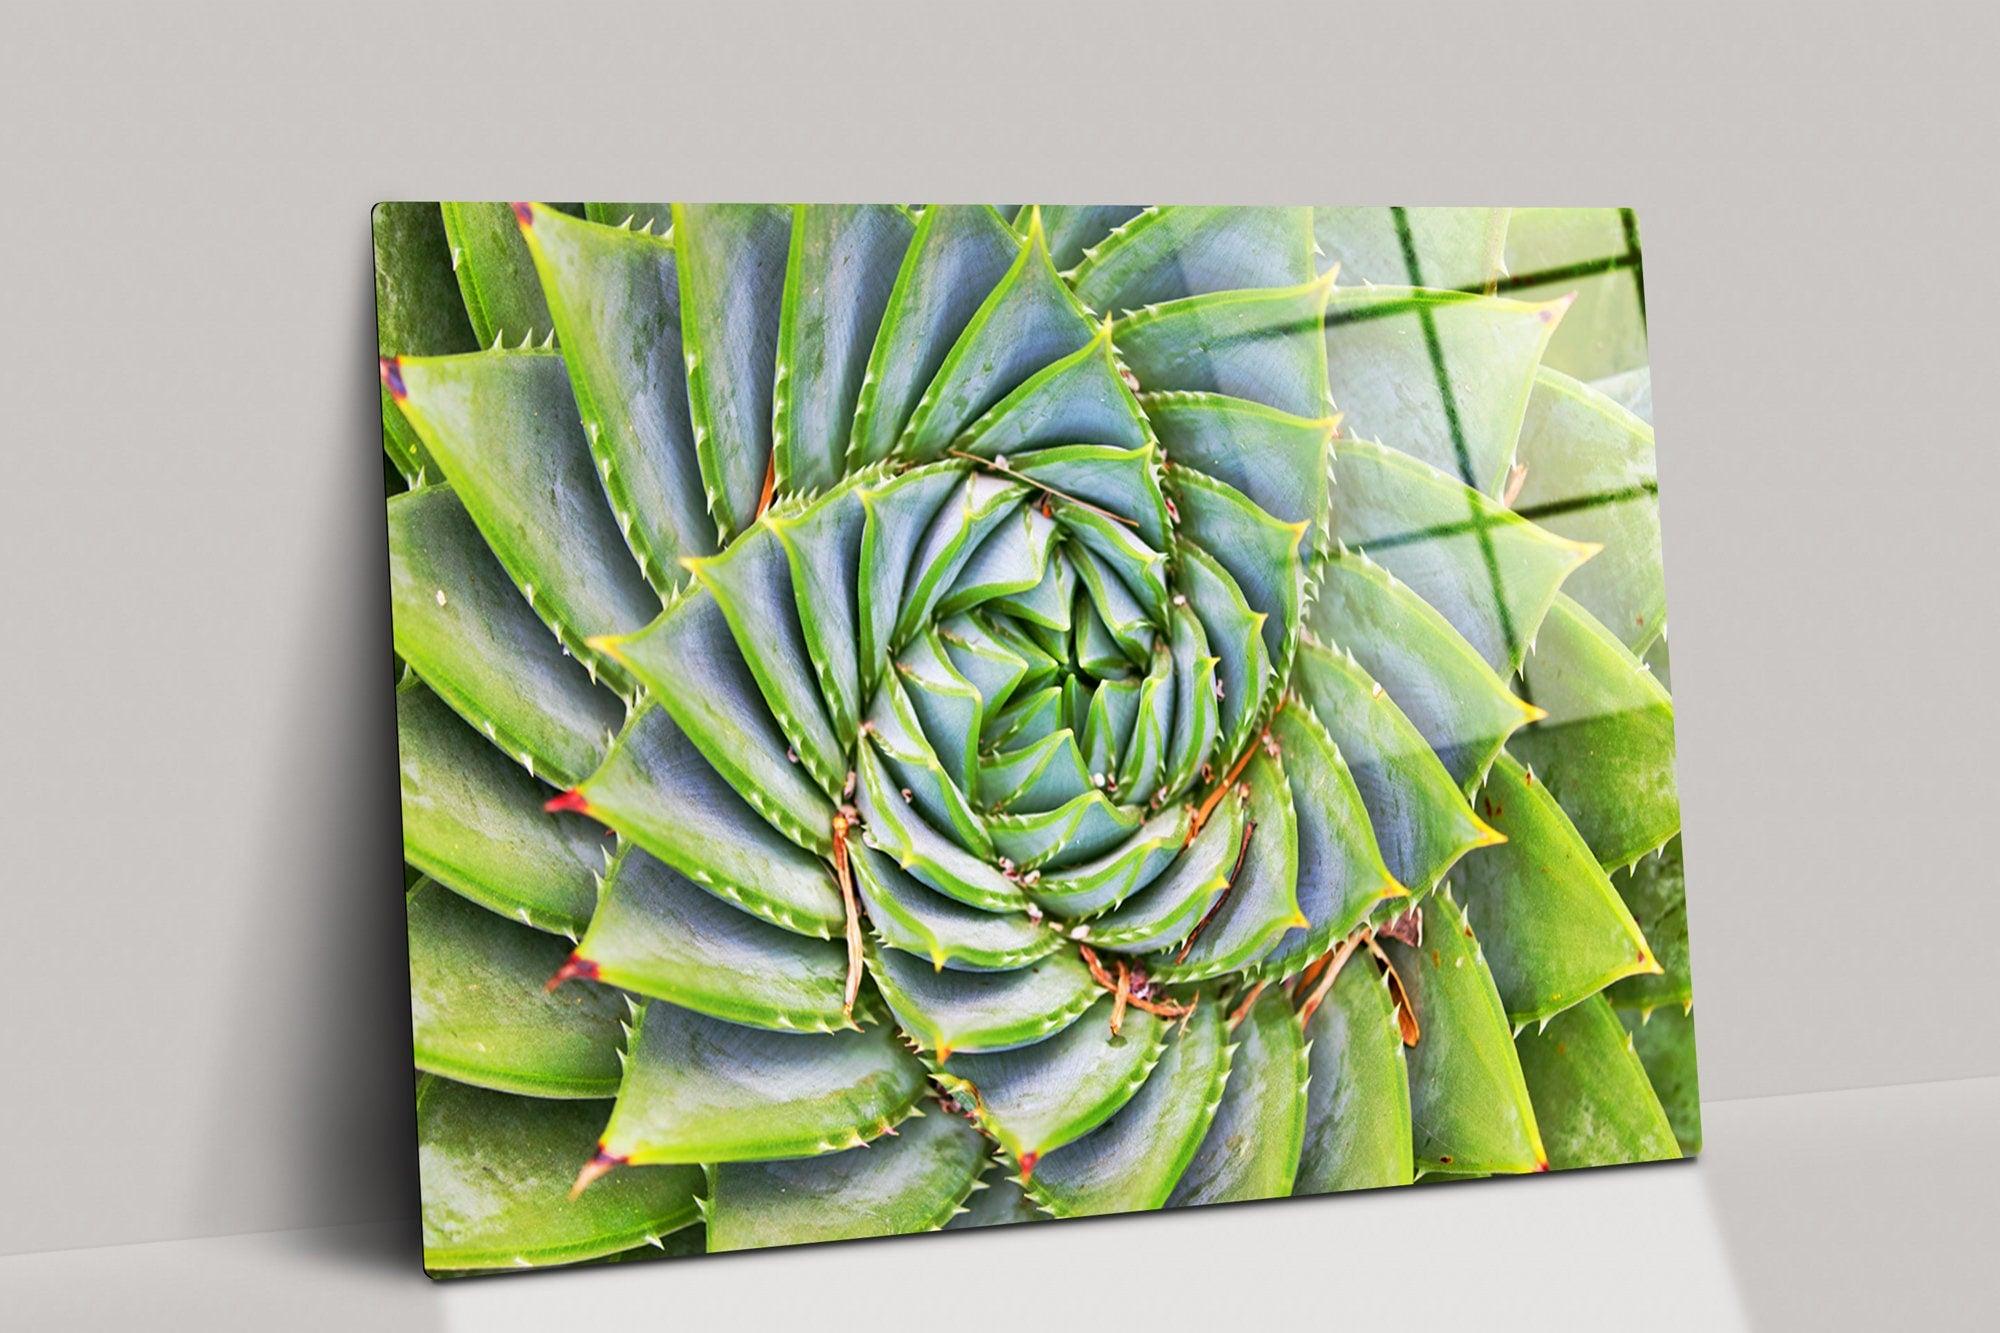 Closeup Photograph of Cactus Succulent Plant Floral & Botanical Nature Photo Wrapped Canvas Print Wall Art Office Decor Home Decoration